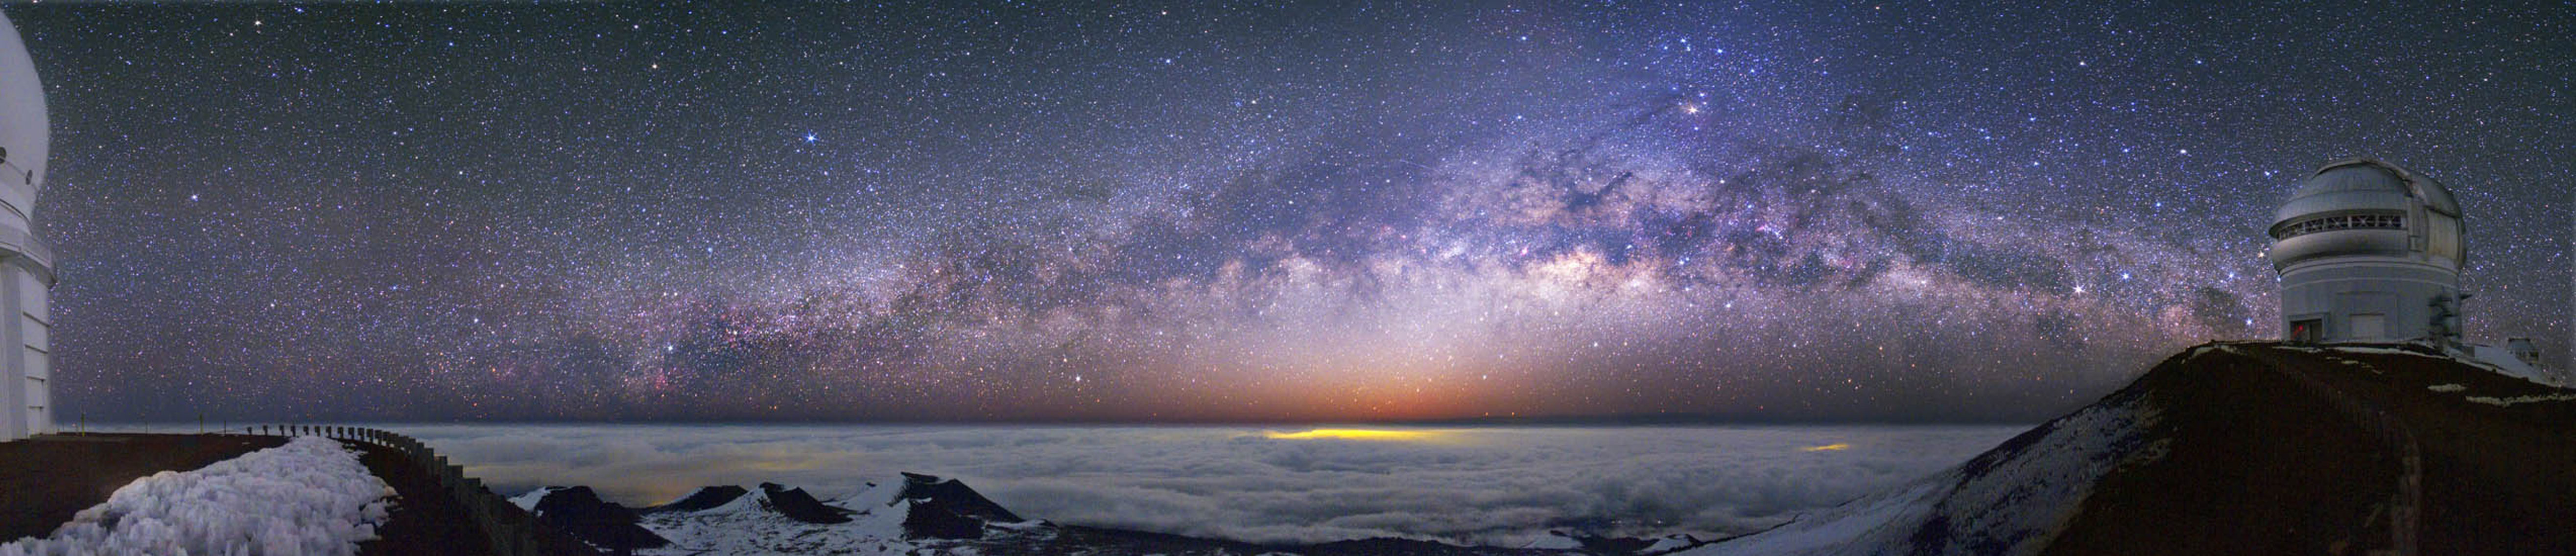 iPhone Wallpaper Panorama Milky Way Jpg